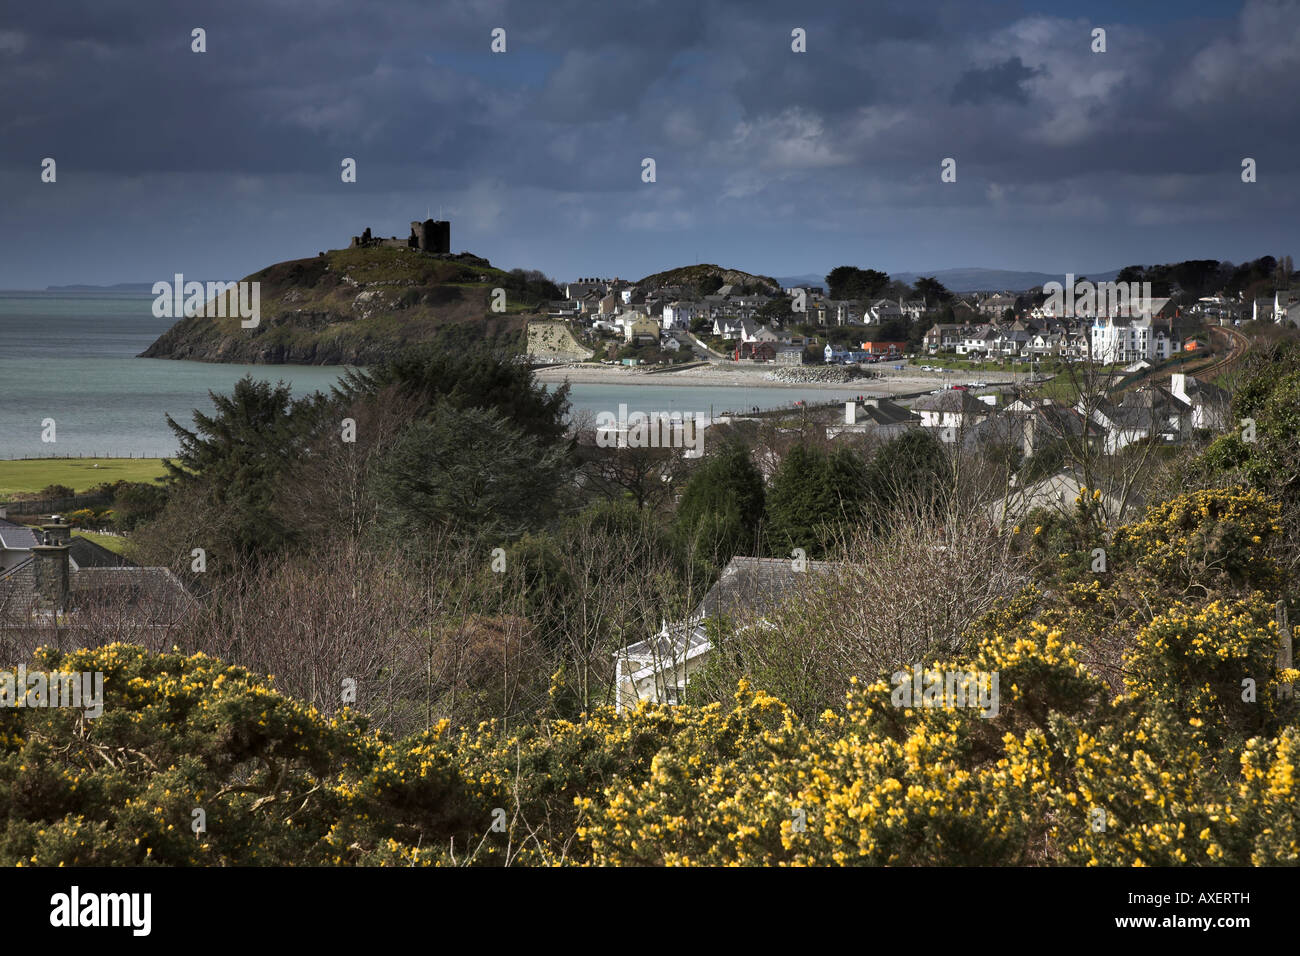 The Village and Castle at Criccieth on the gwynedd coast. Stock Photo